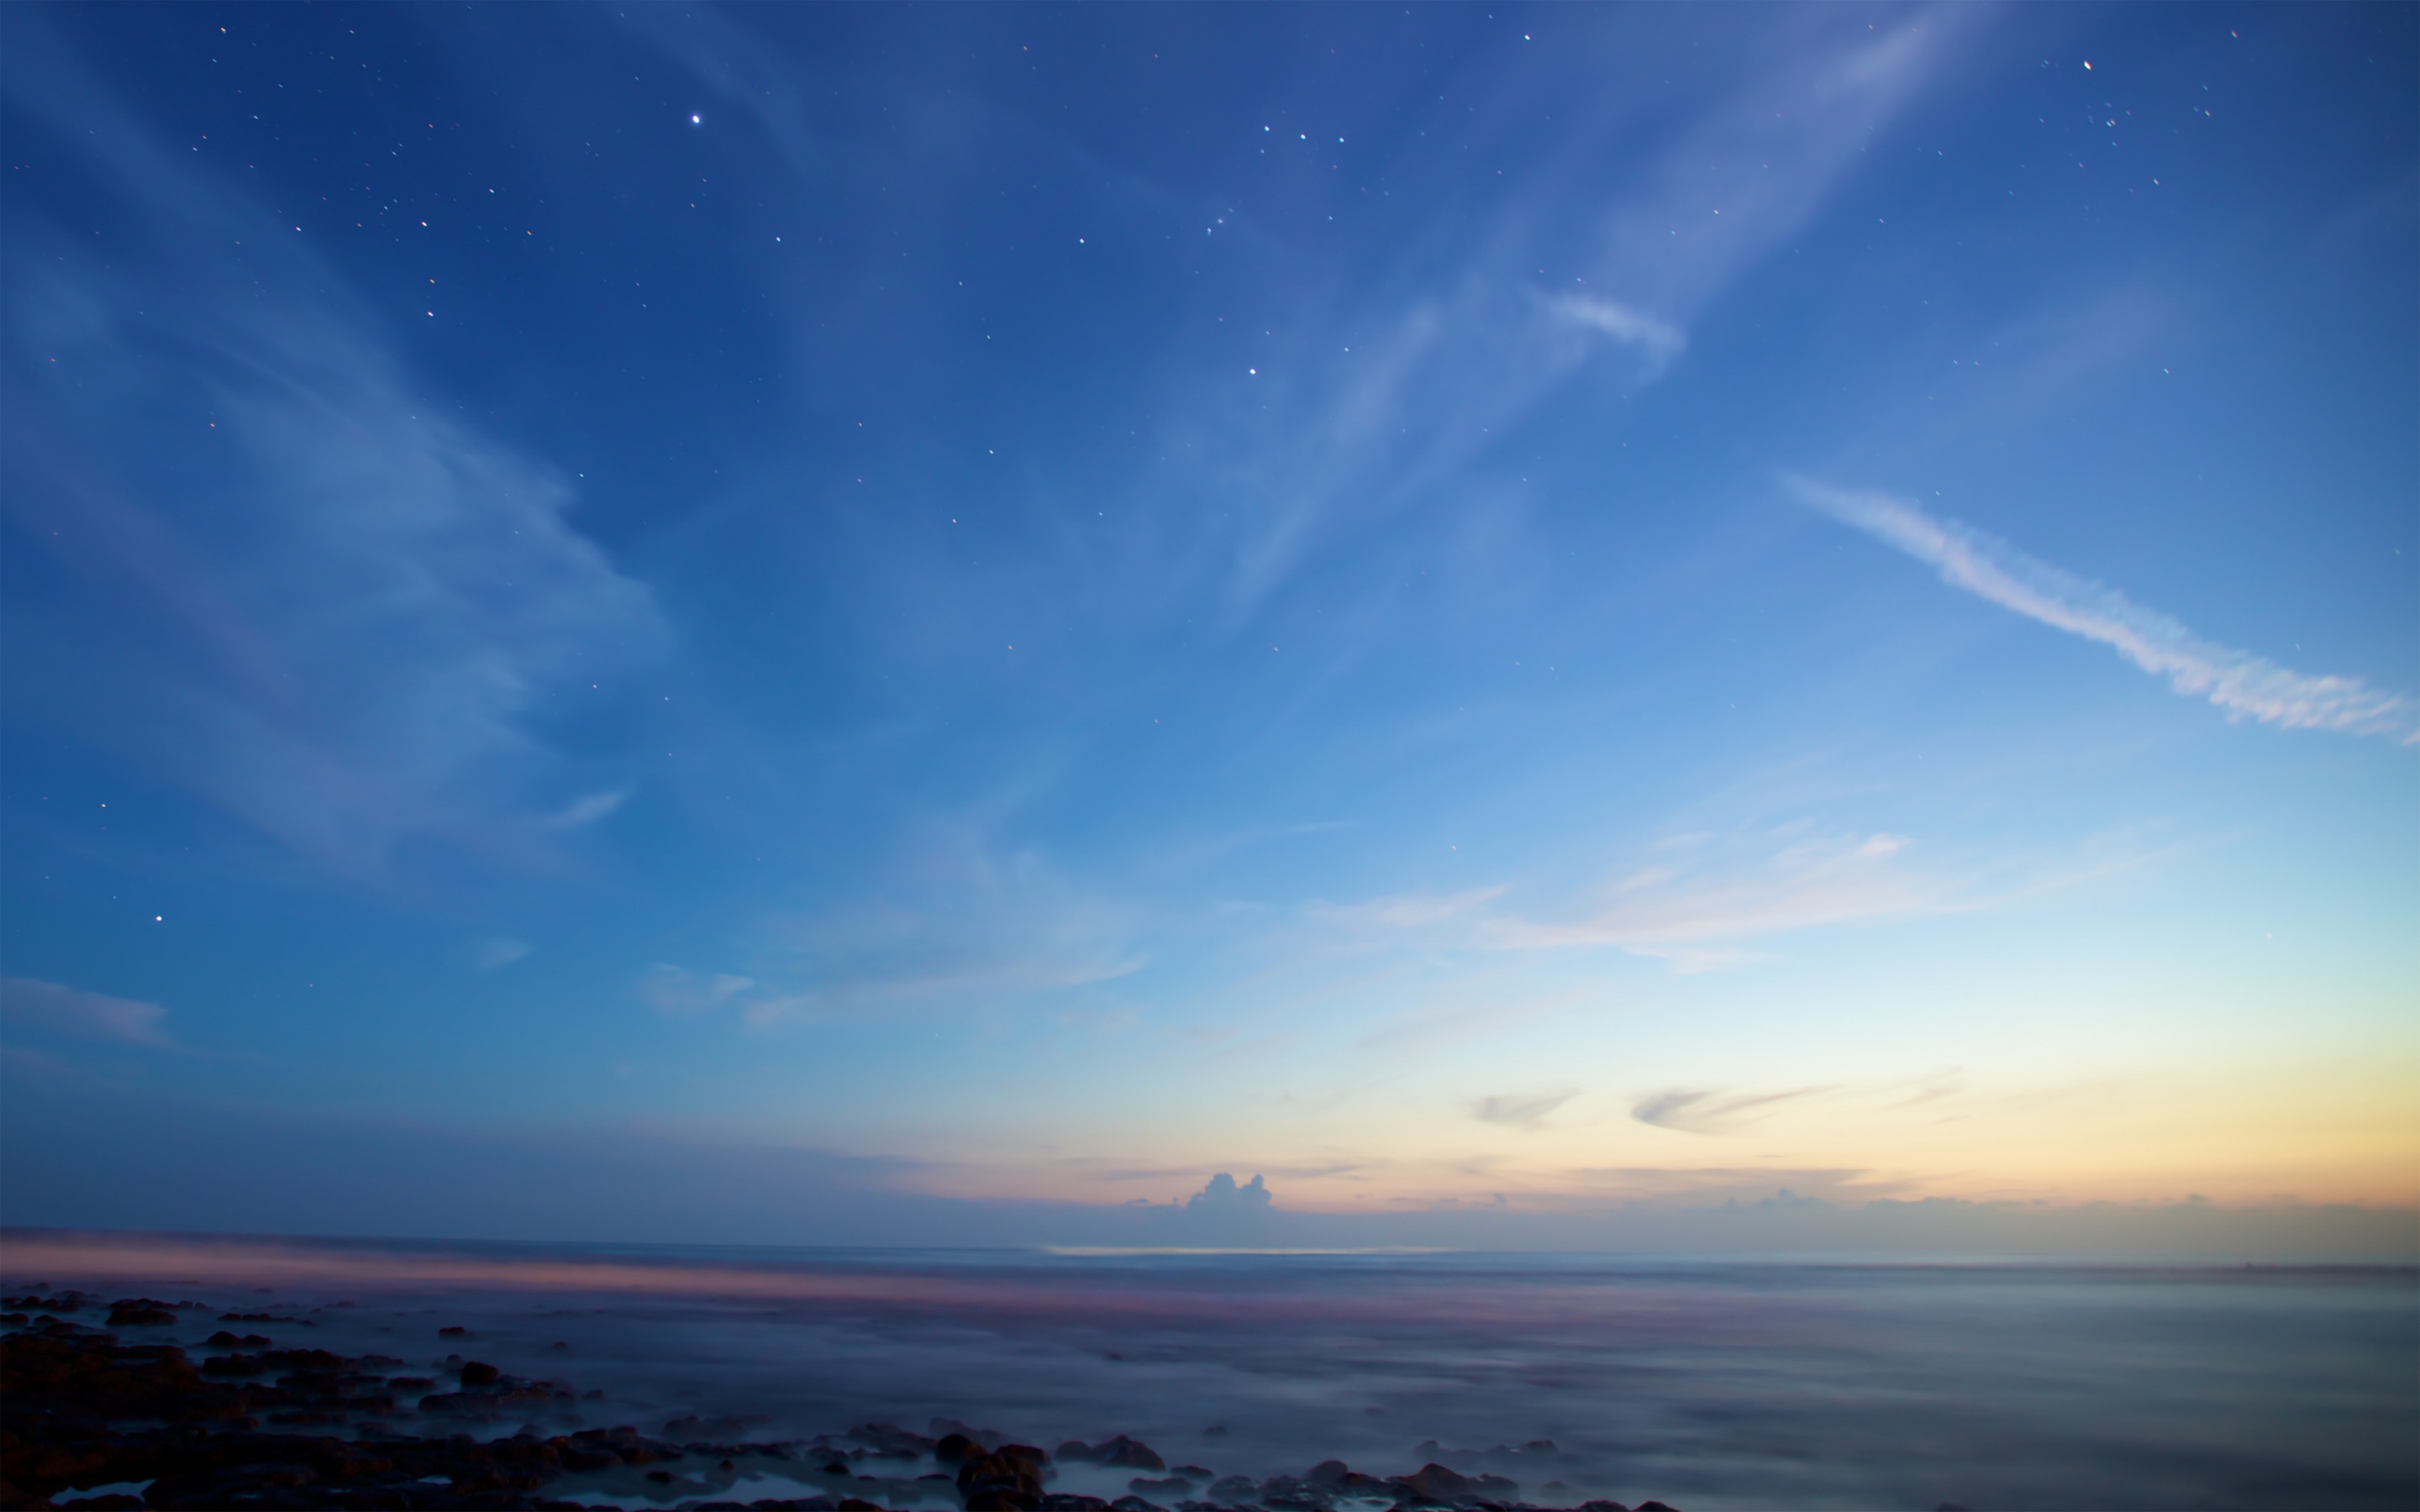 General 2880x1800 landscape nature outdoors stars sky skyscape sunset sea beach sunset glow horizon low light